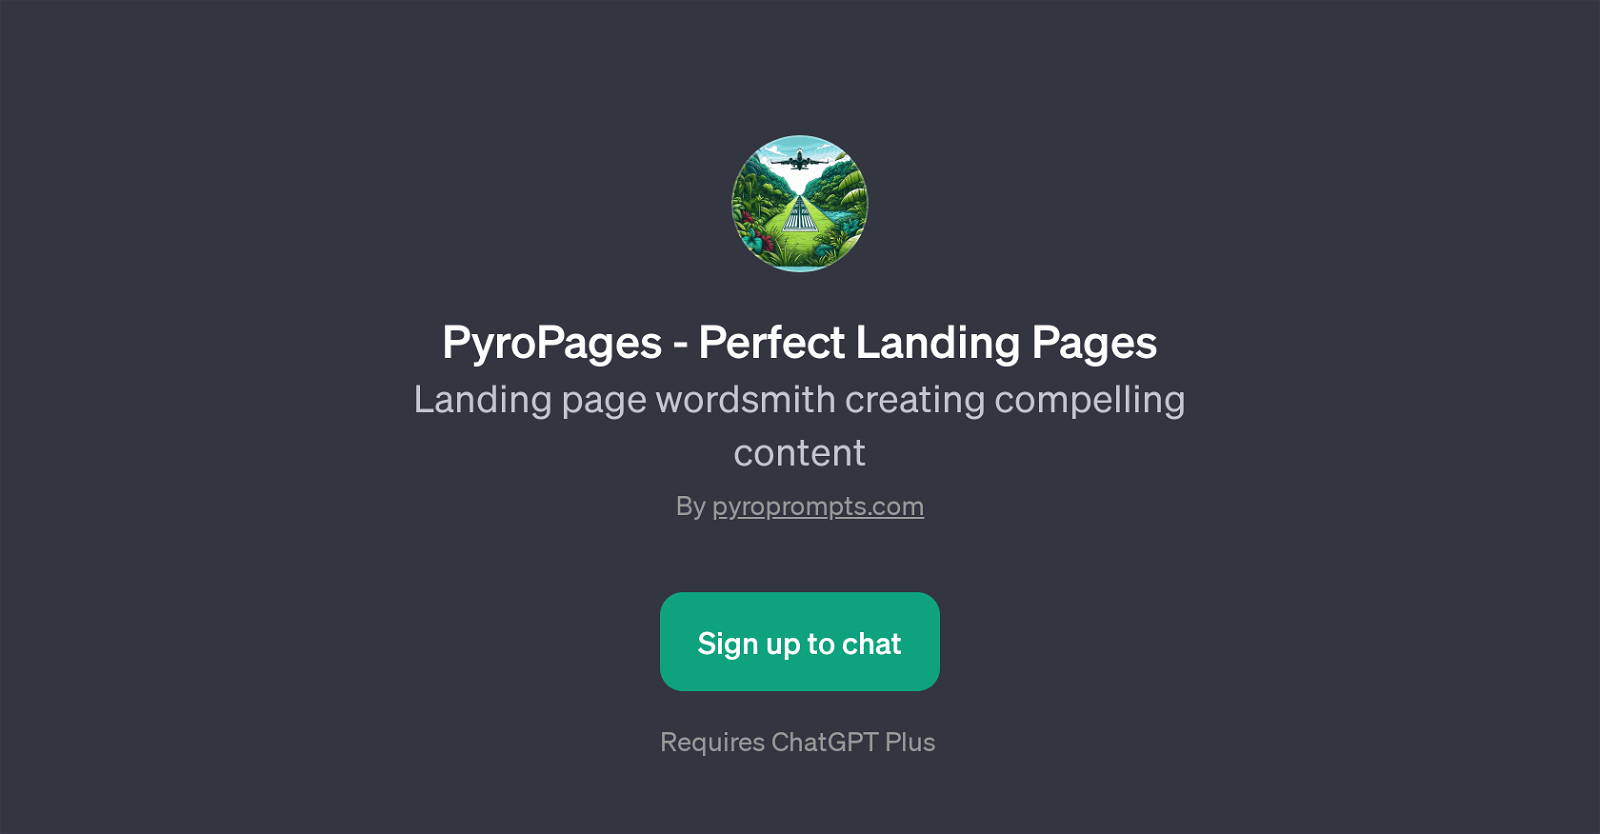 PyroPages website